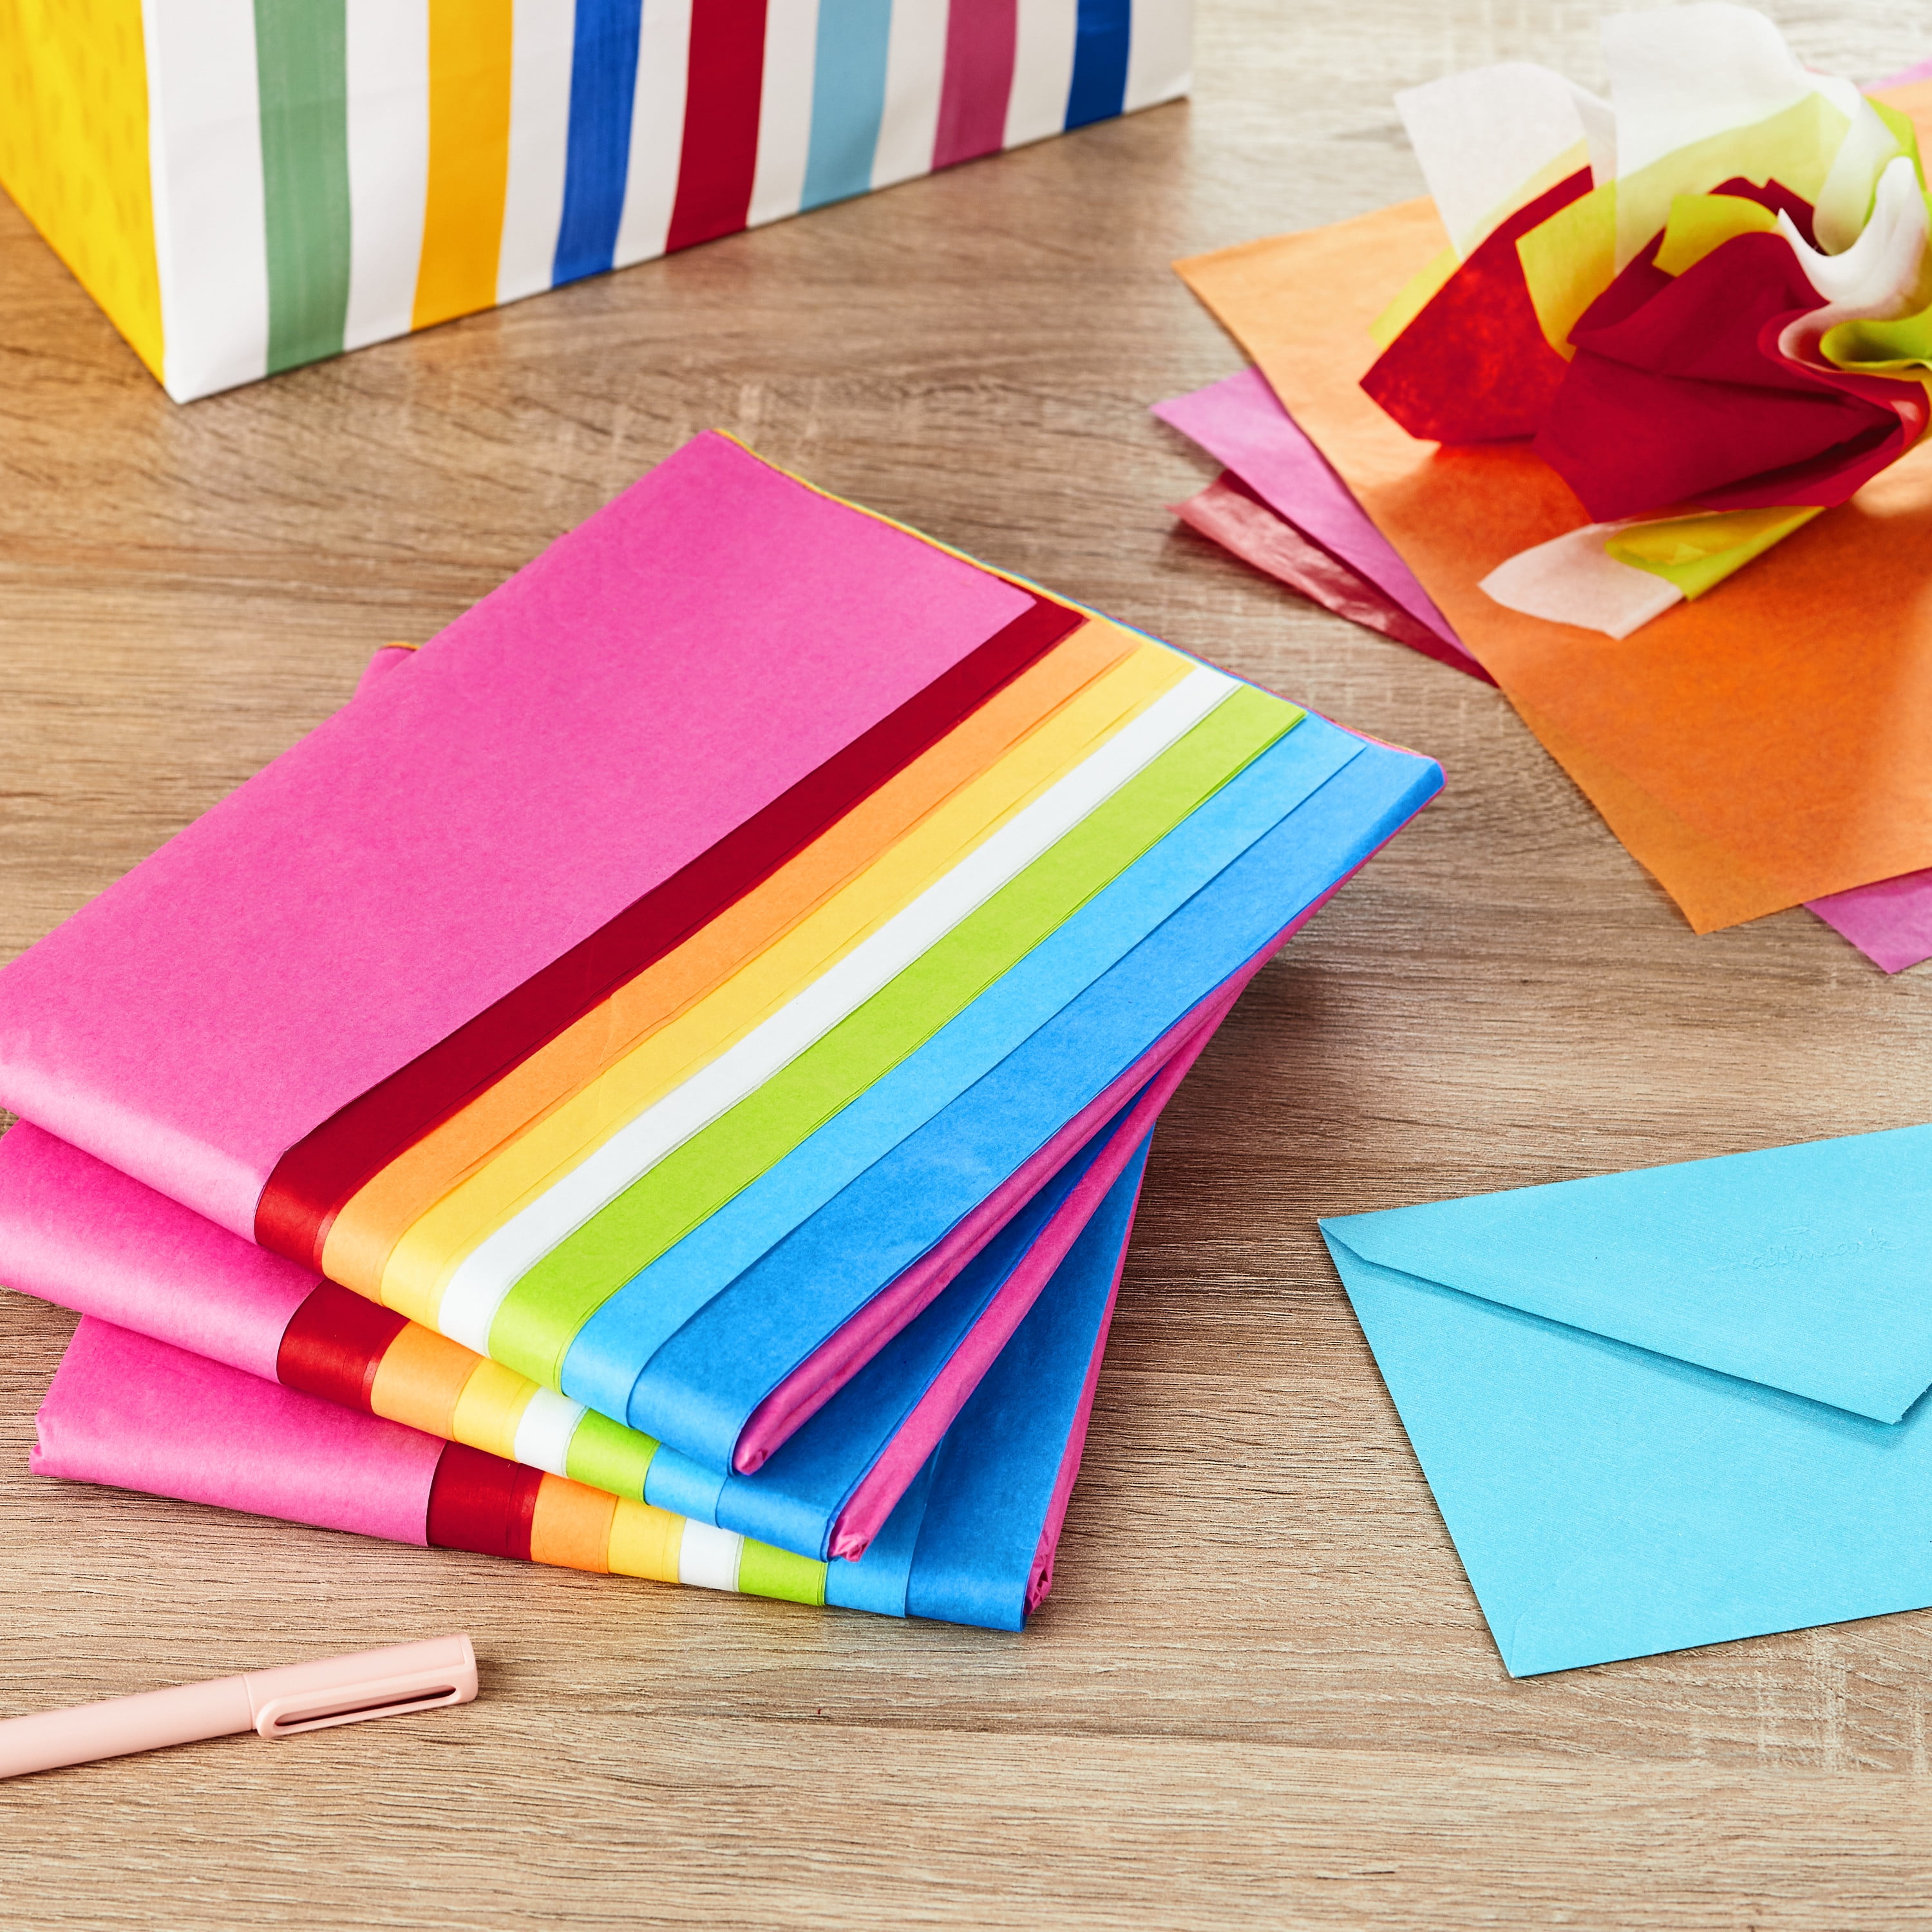 Assorted Pastel Colors Bulk Tissue Paper, 120 sheets - Tissue - Hallmark